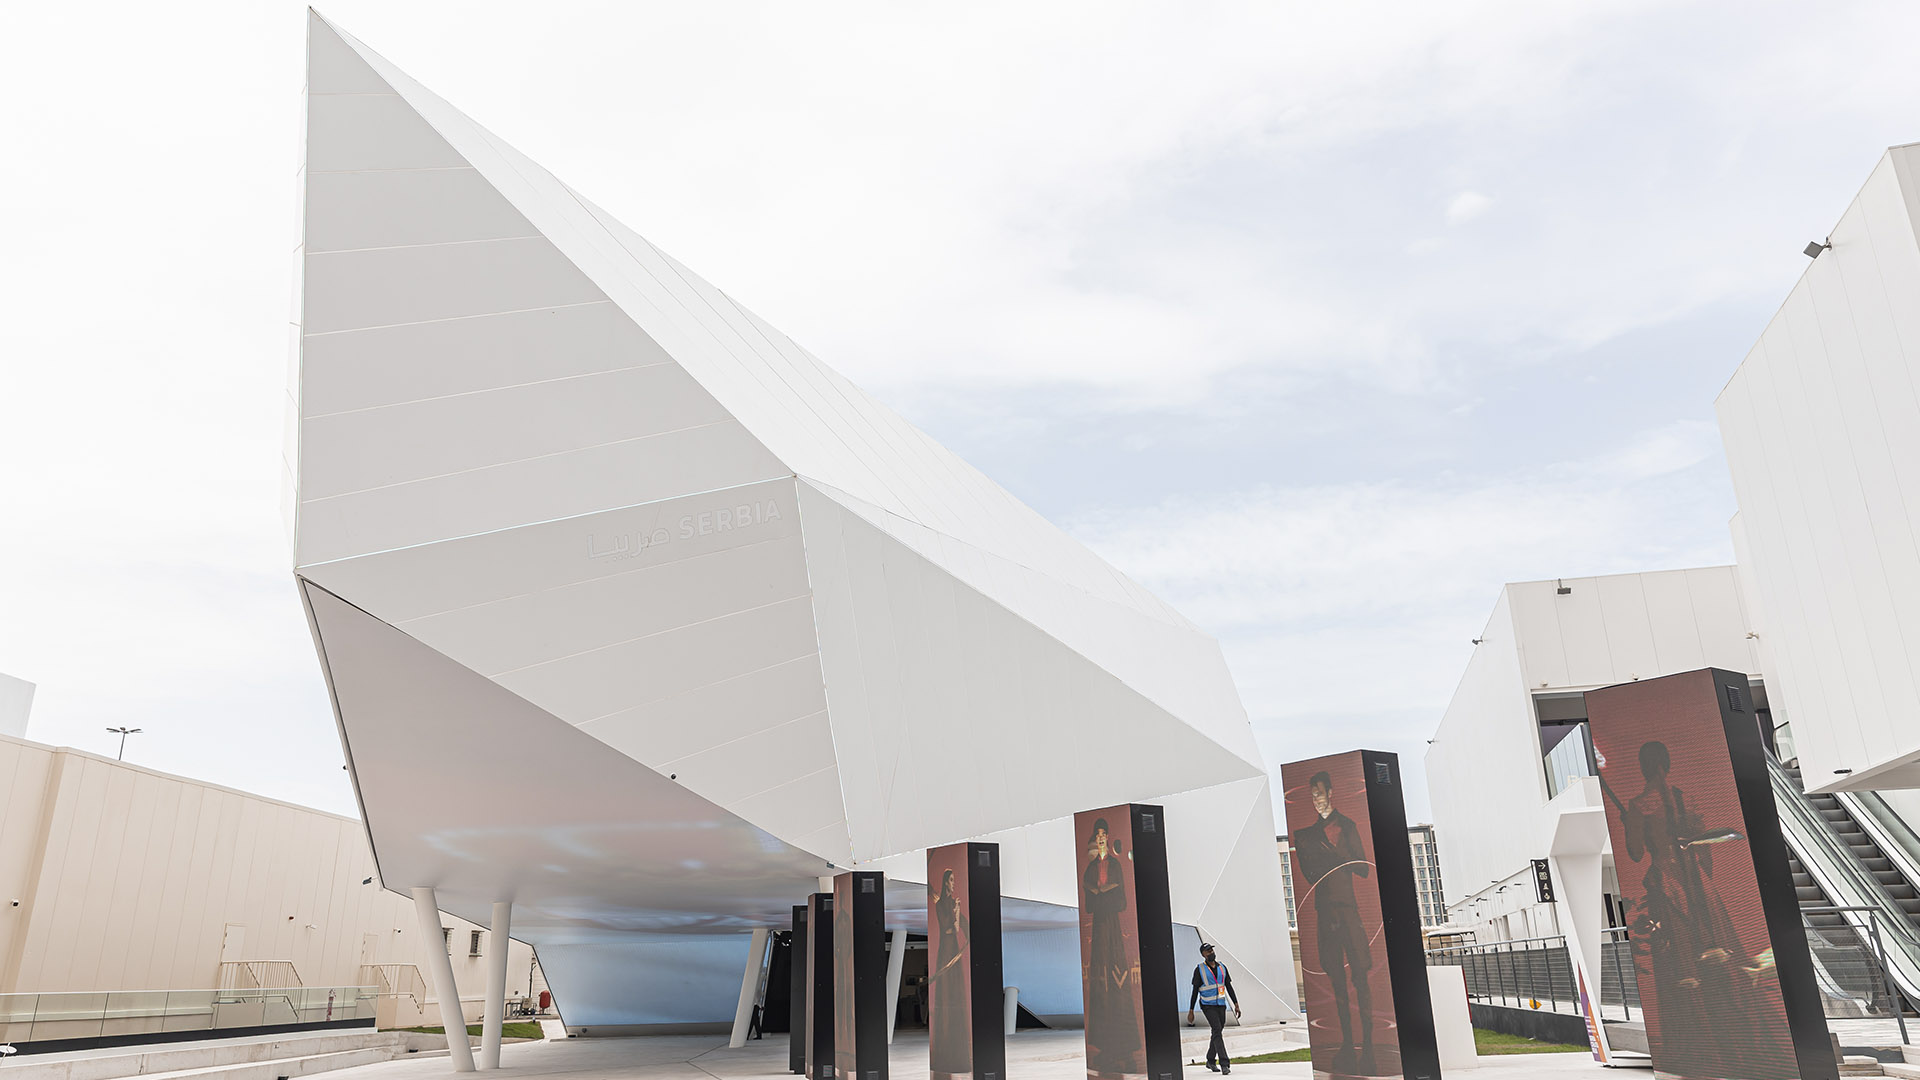 Pavilion of the Republic of Serbia at Expo 2020 Dubai